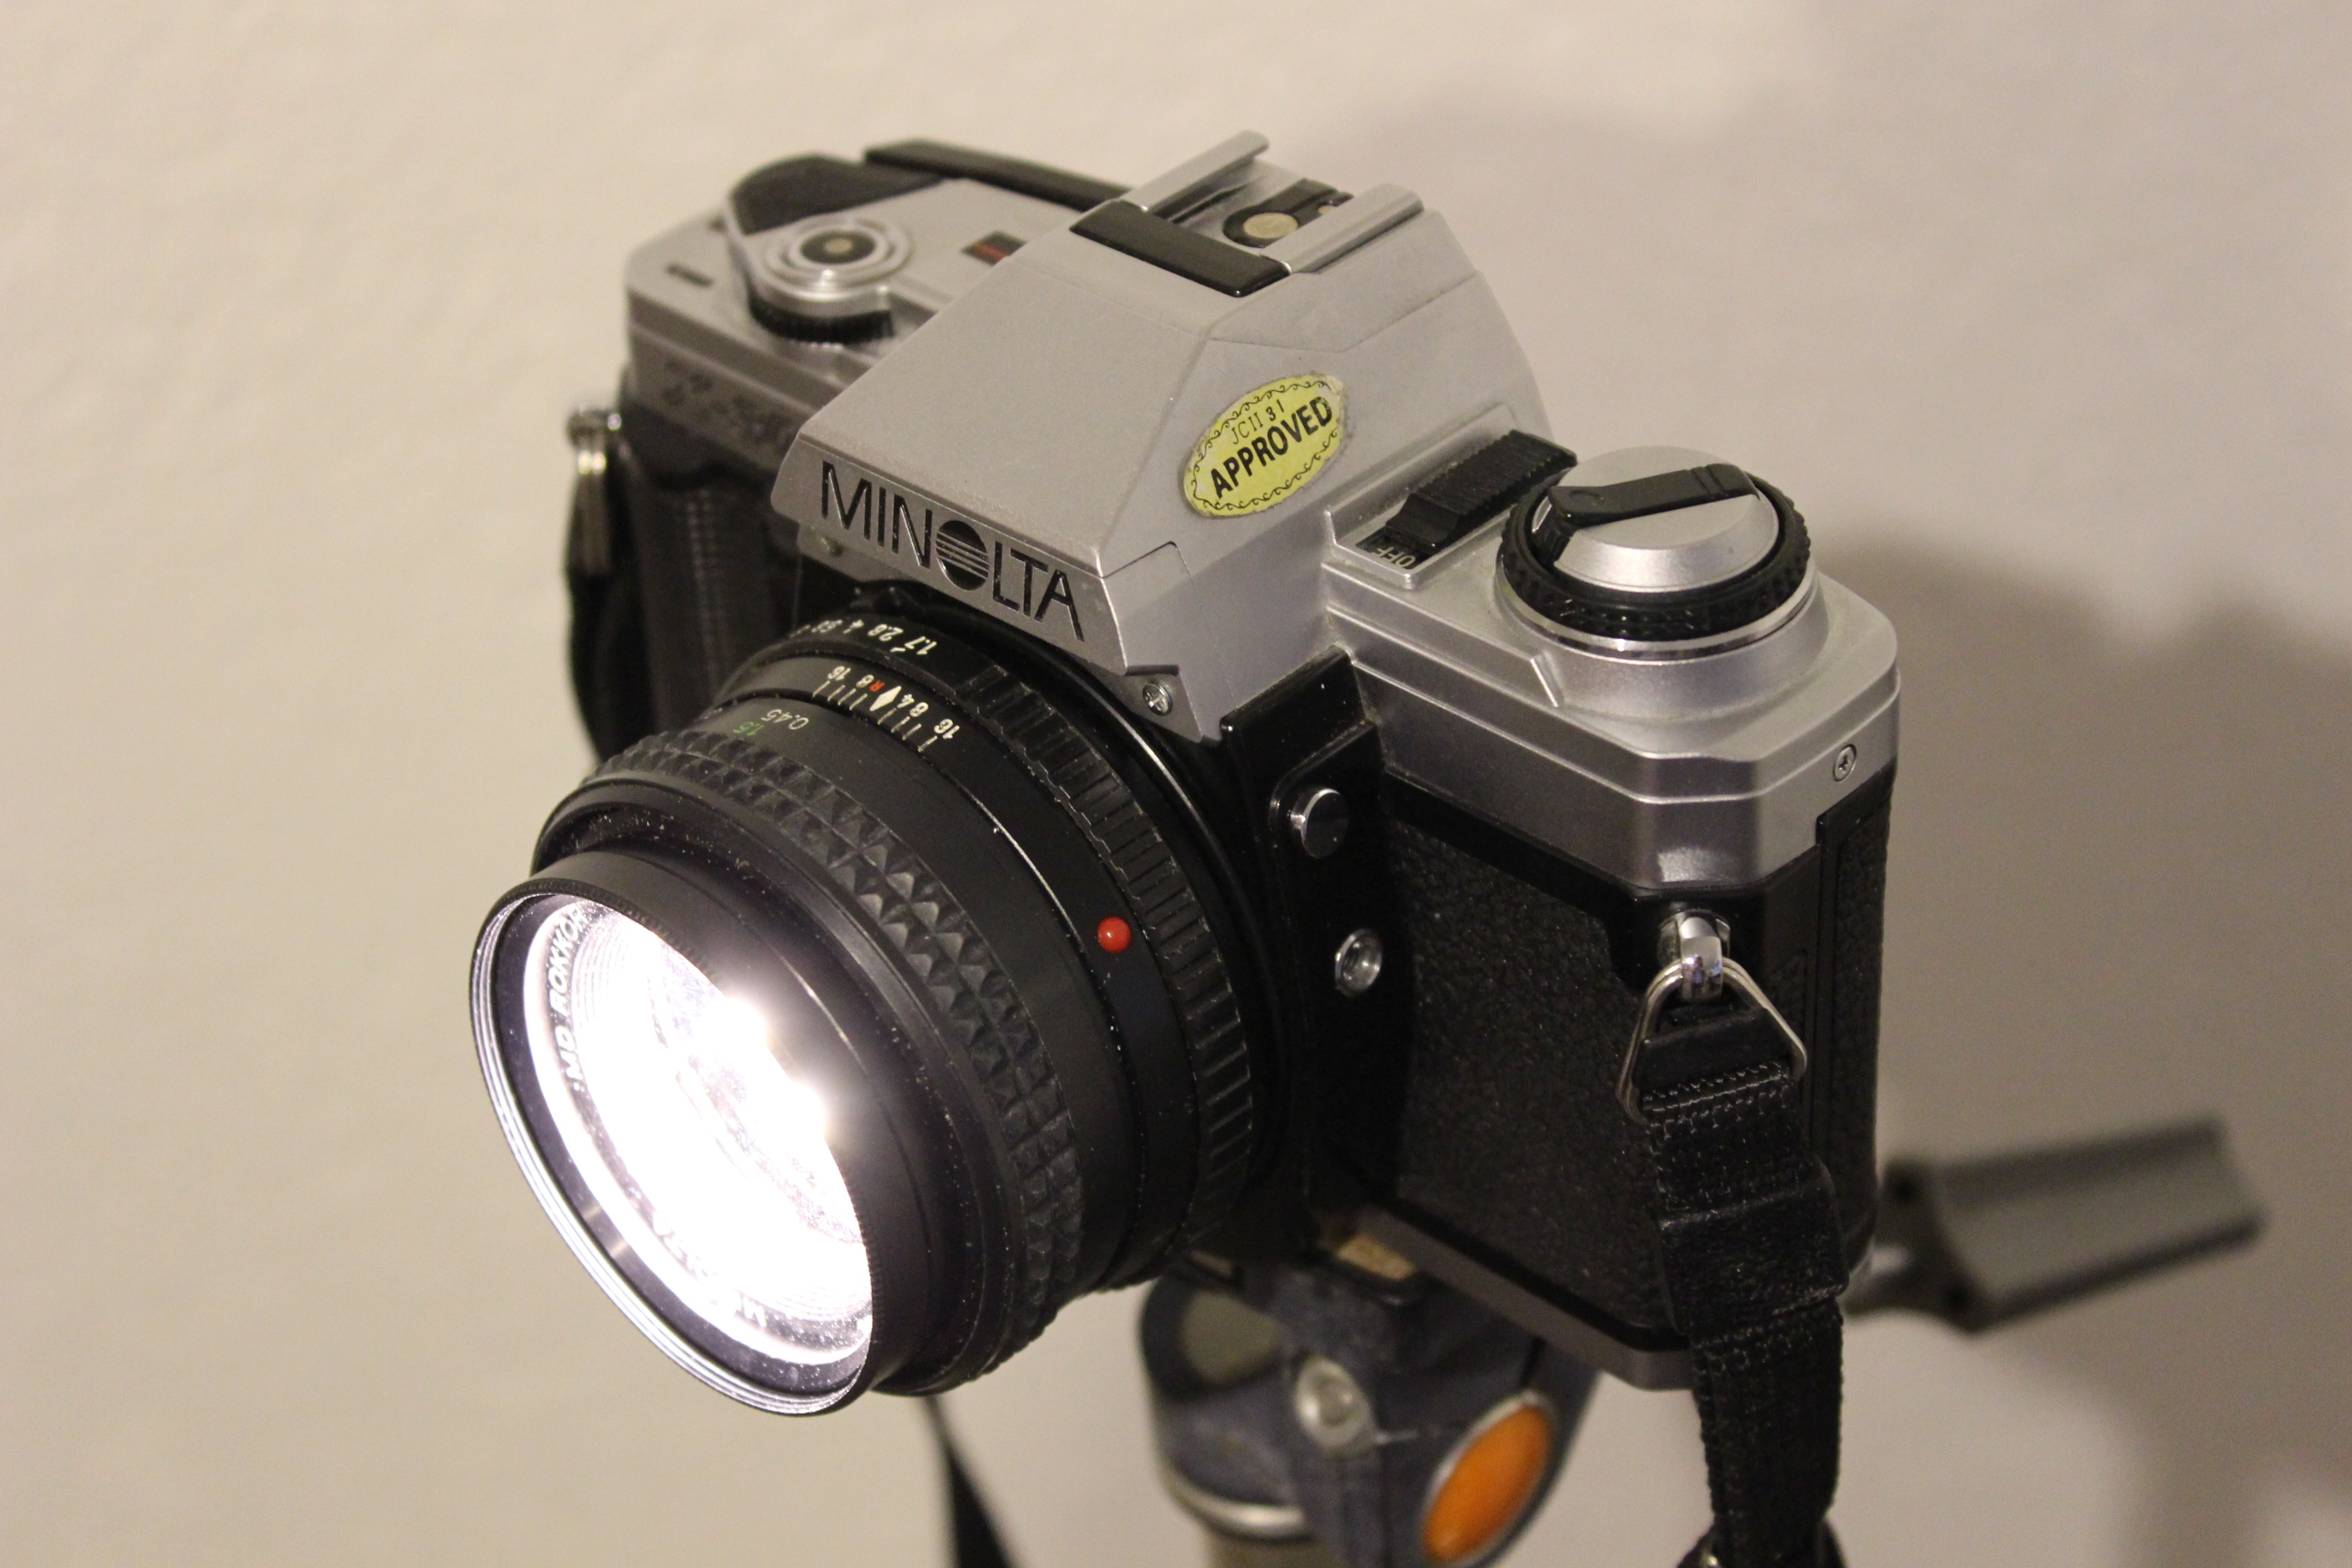 Fotokamera auf Stativ in Spotlampe umgebaut